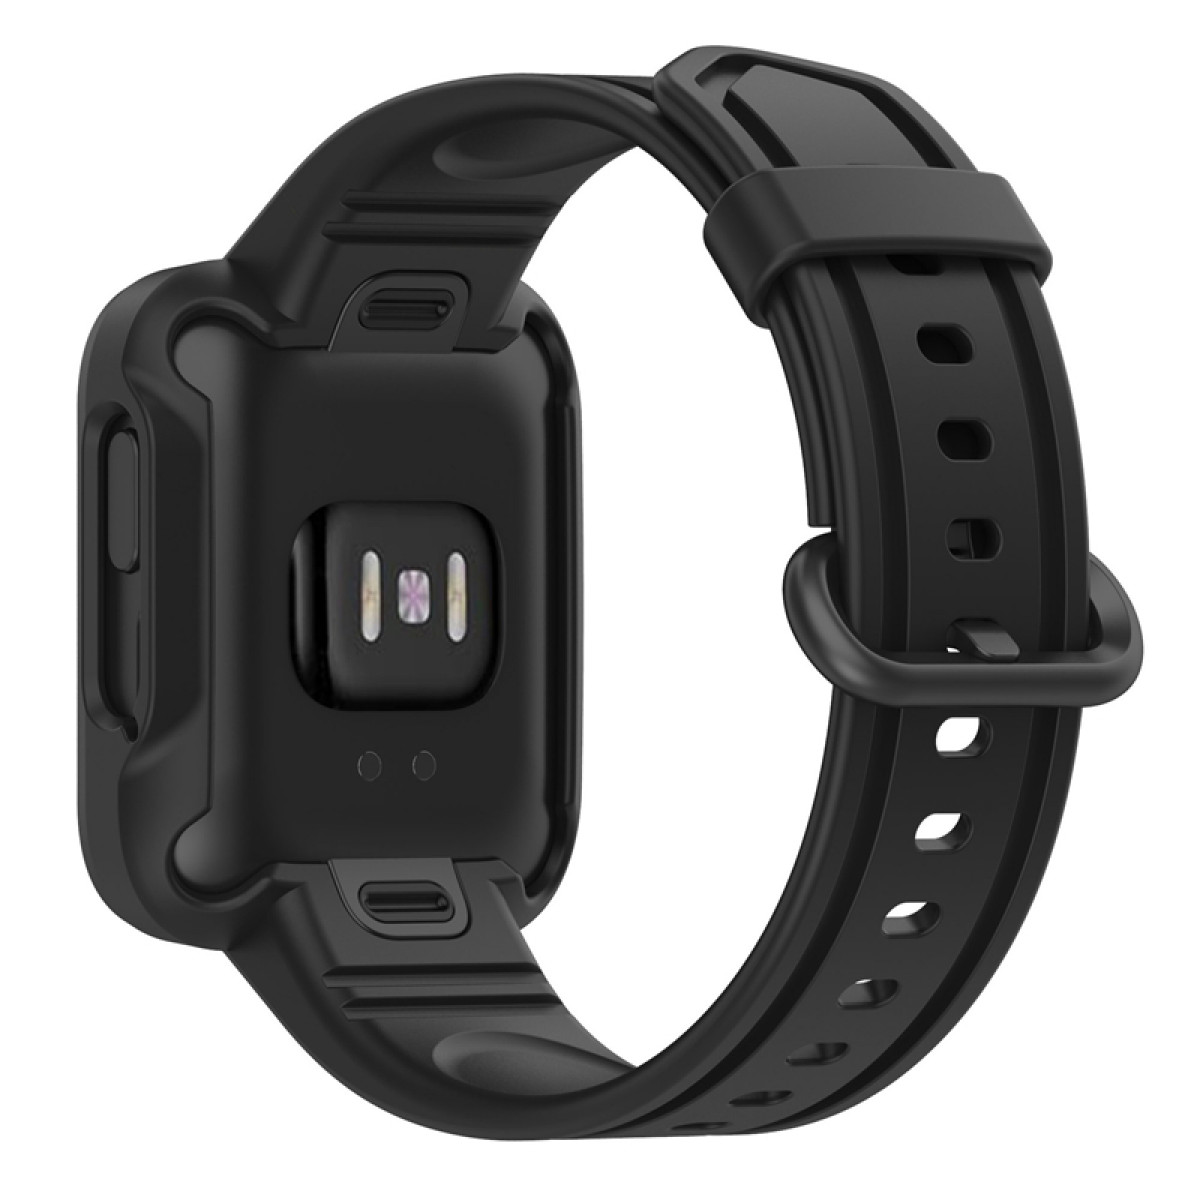 2/Poco INF 2 Watch Mi Lite/Redmi 2/ Xiaomi, Mi Lite/Redmi Watch Horloge schwarz 2/Redmi Lite Armband, Watch Uhrenarmband, Watch, Watch